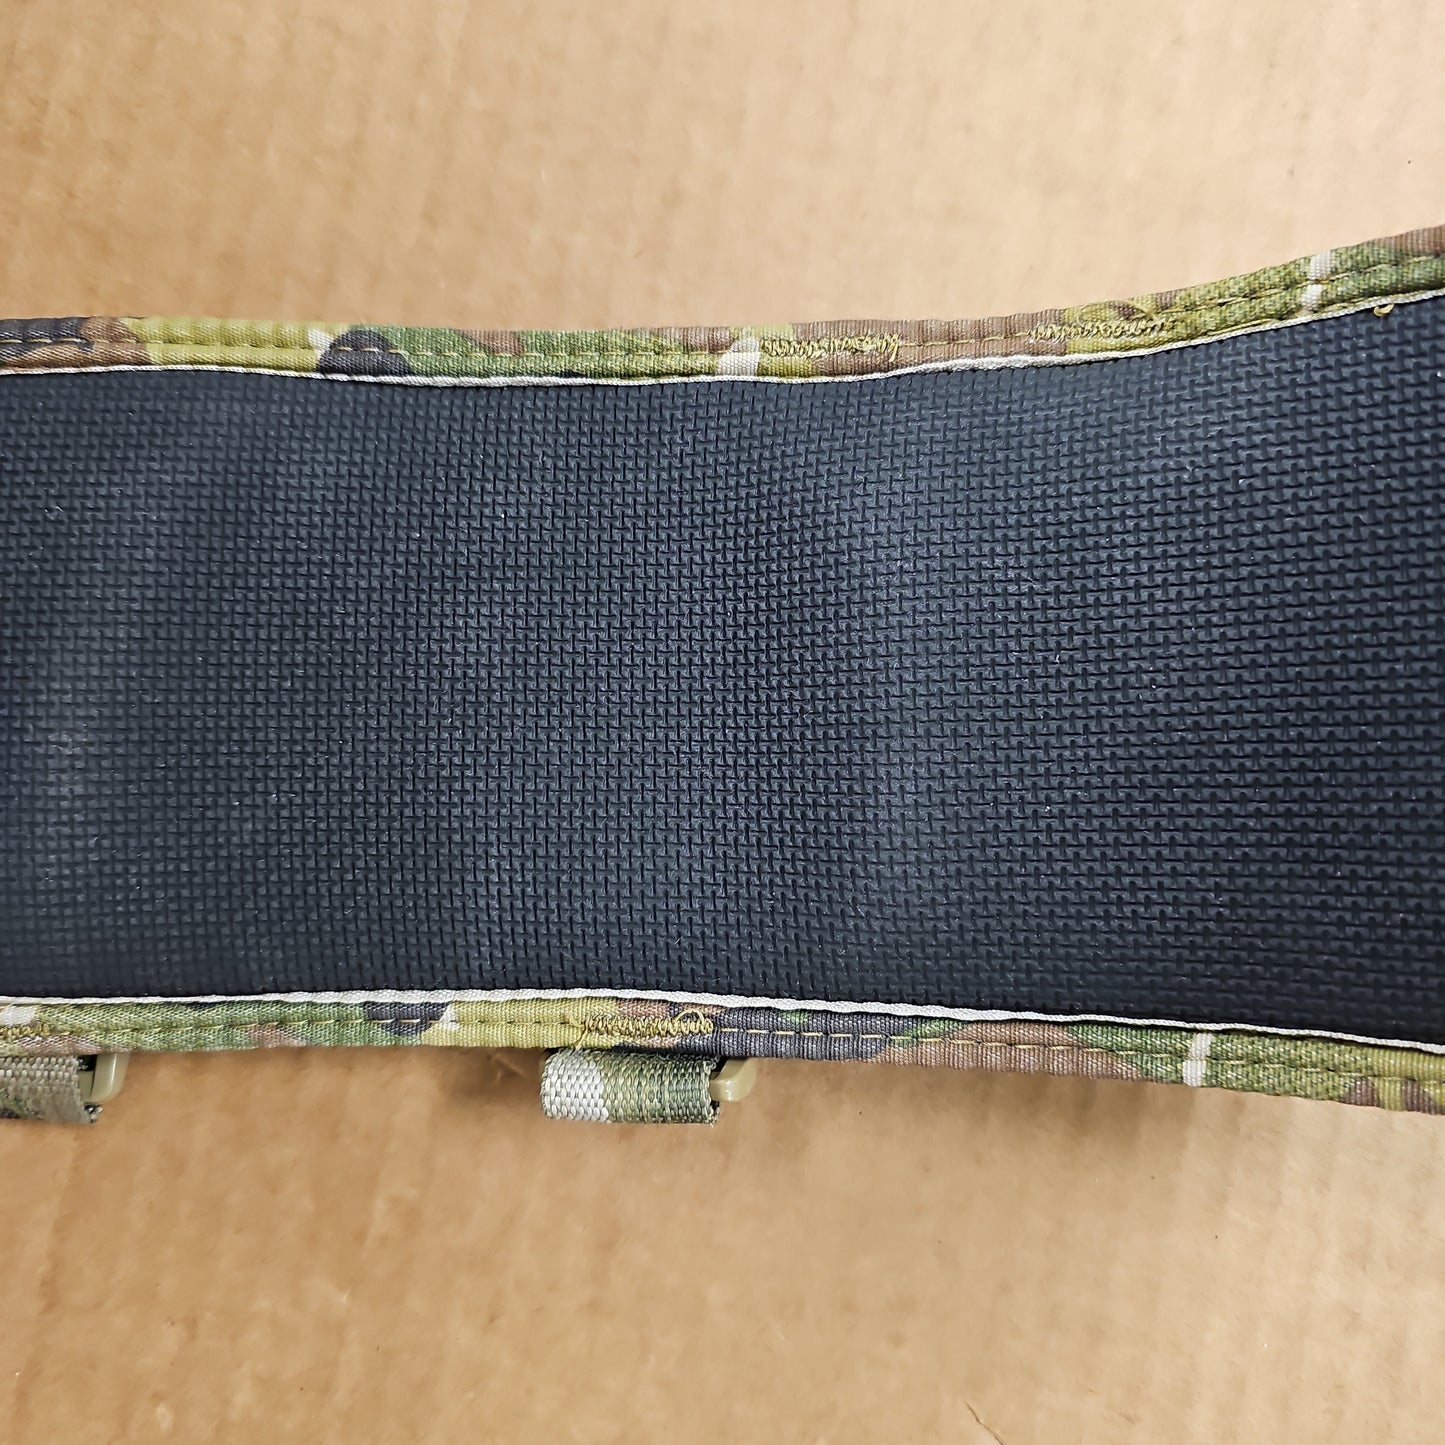 Belt: Sure Grip Padded Belt, Small 30.5, Multi-Cam 31PB00MC